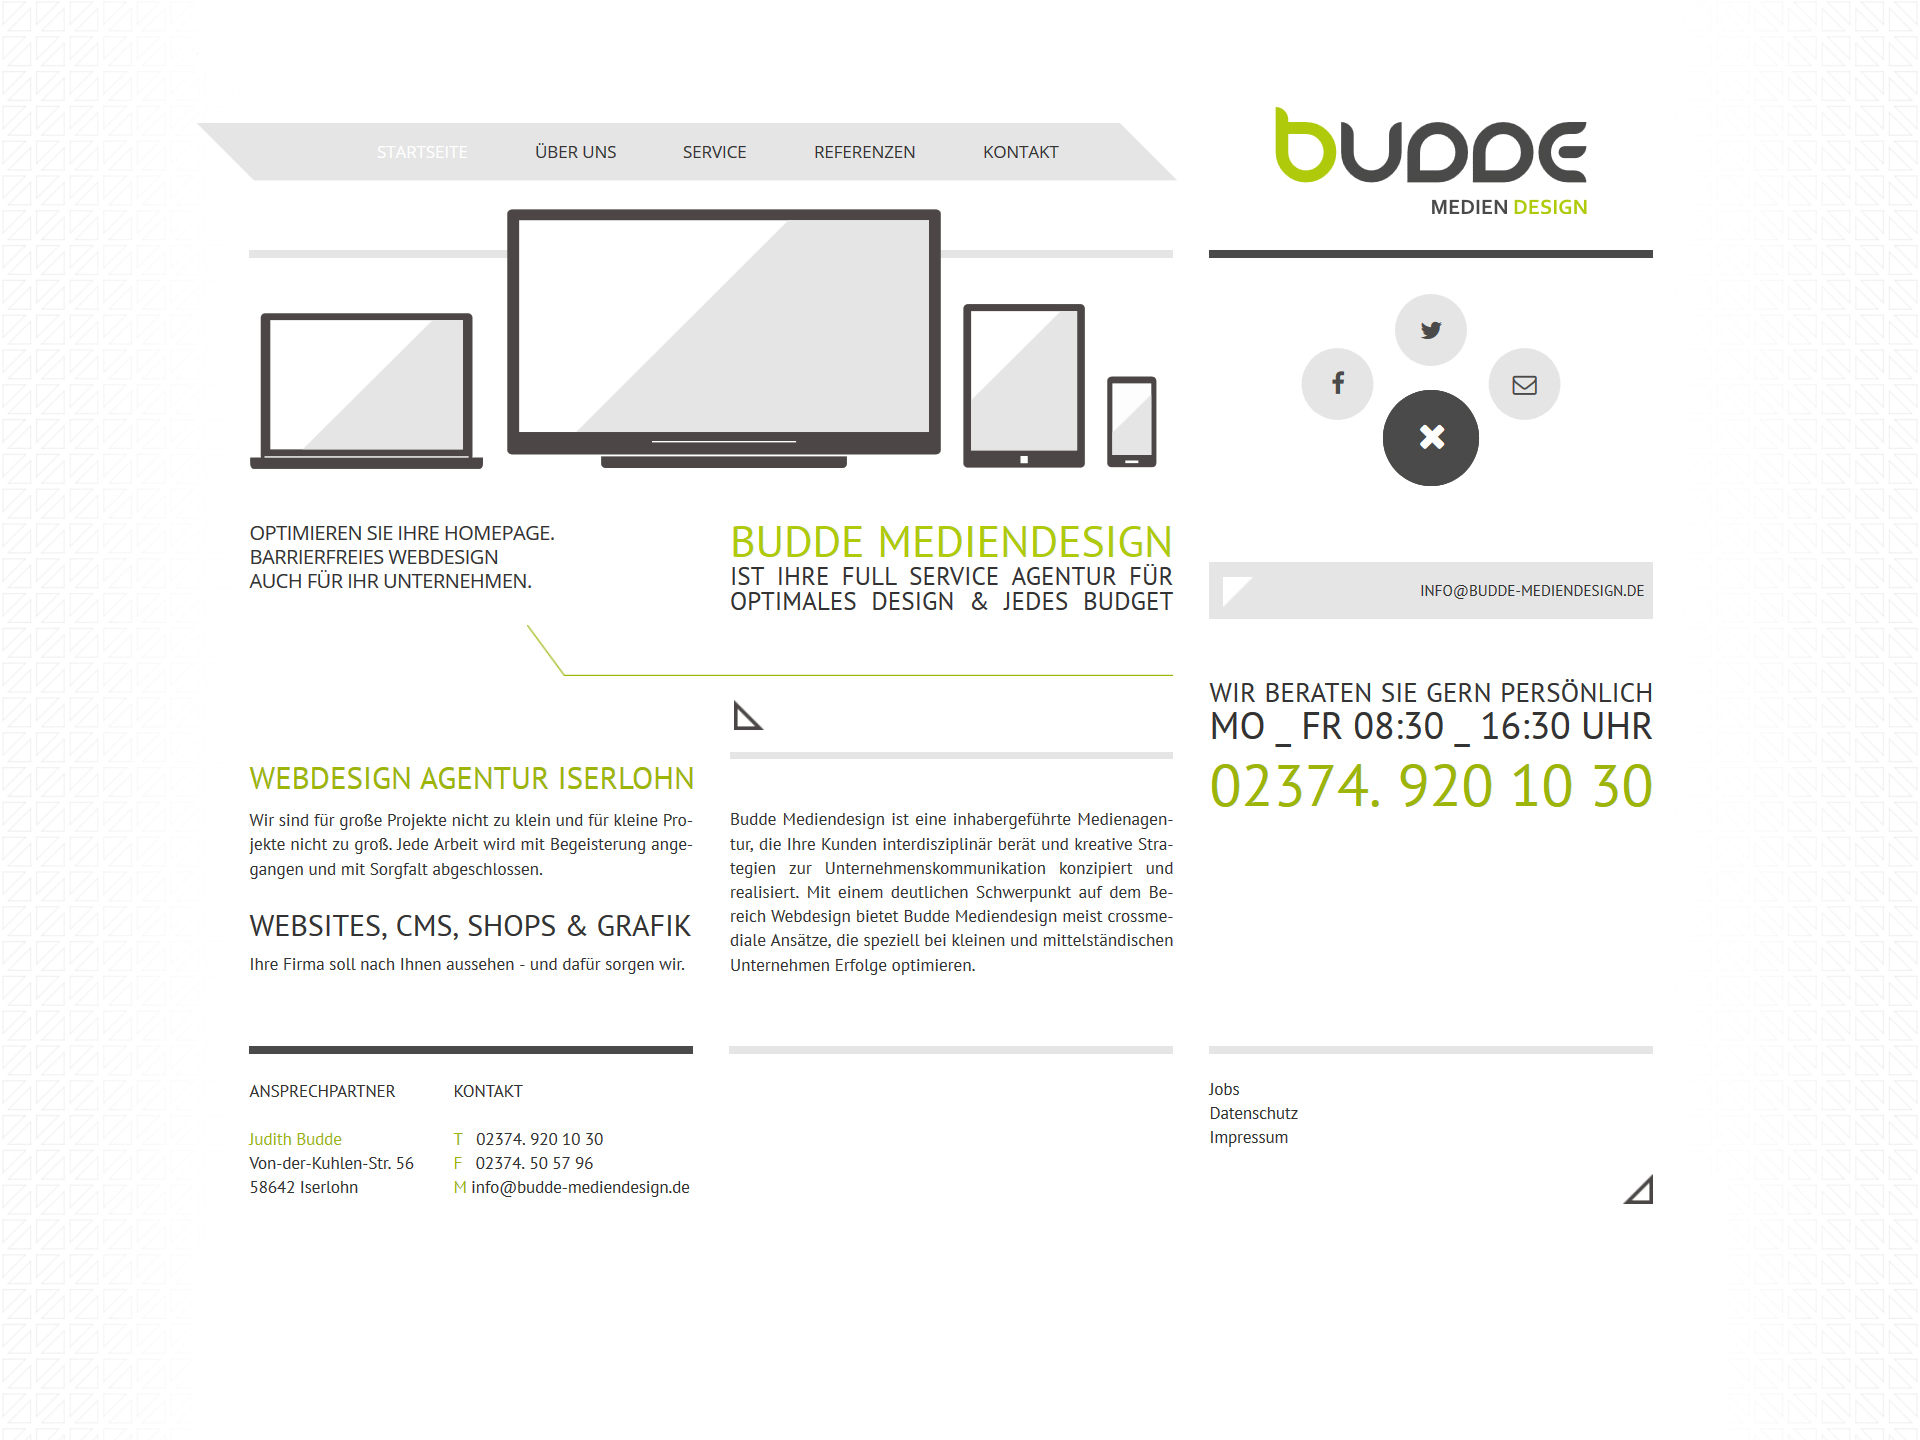 Budde-Mediendesign ()